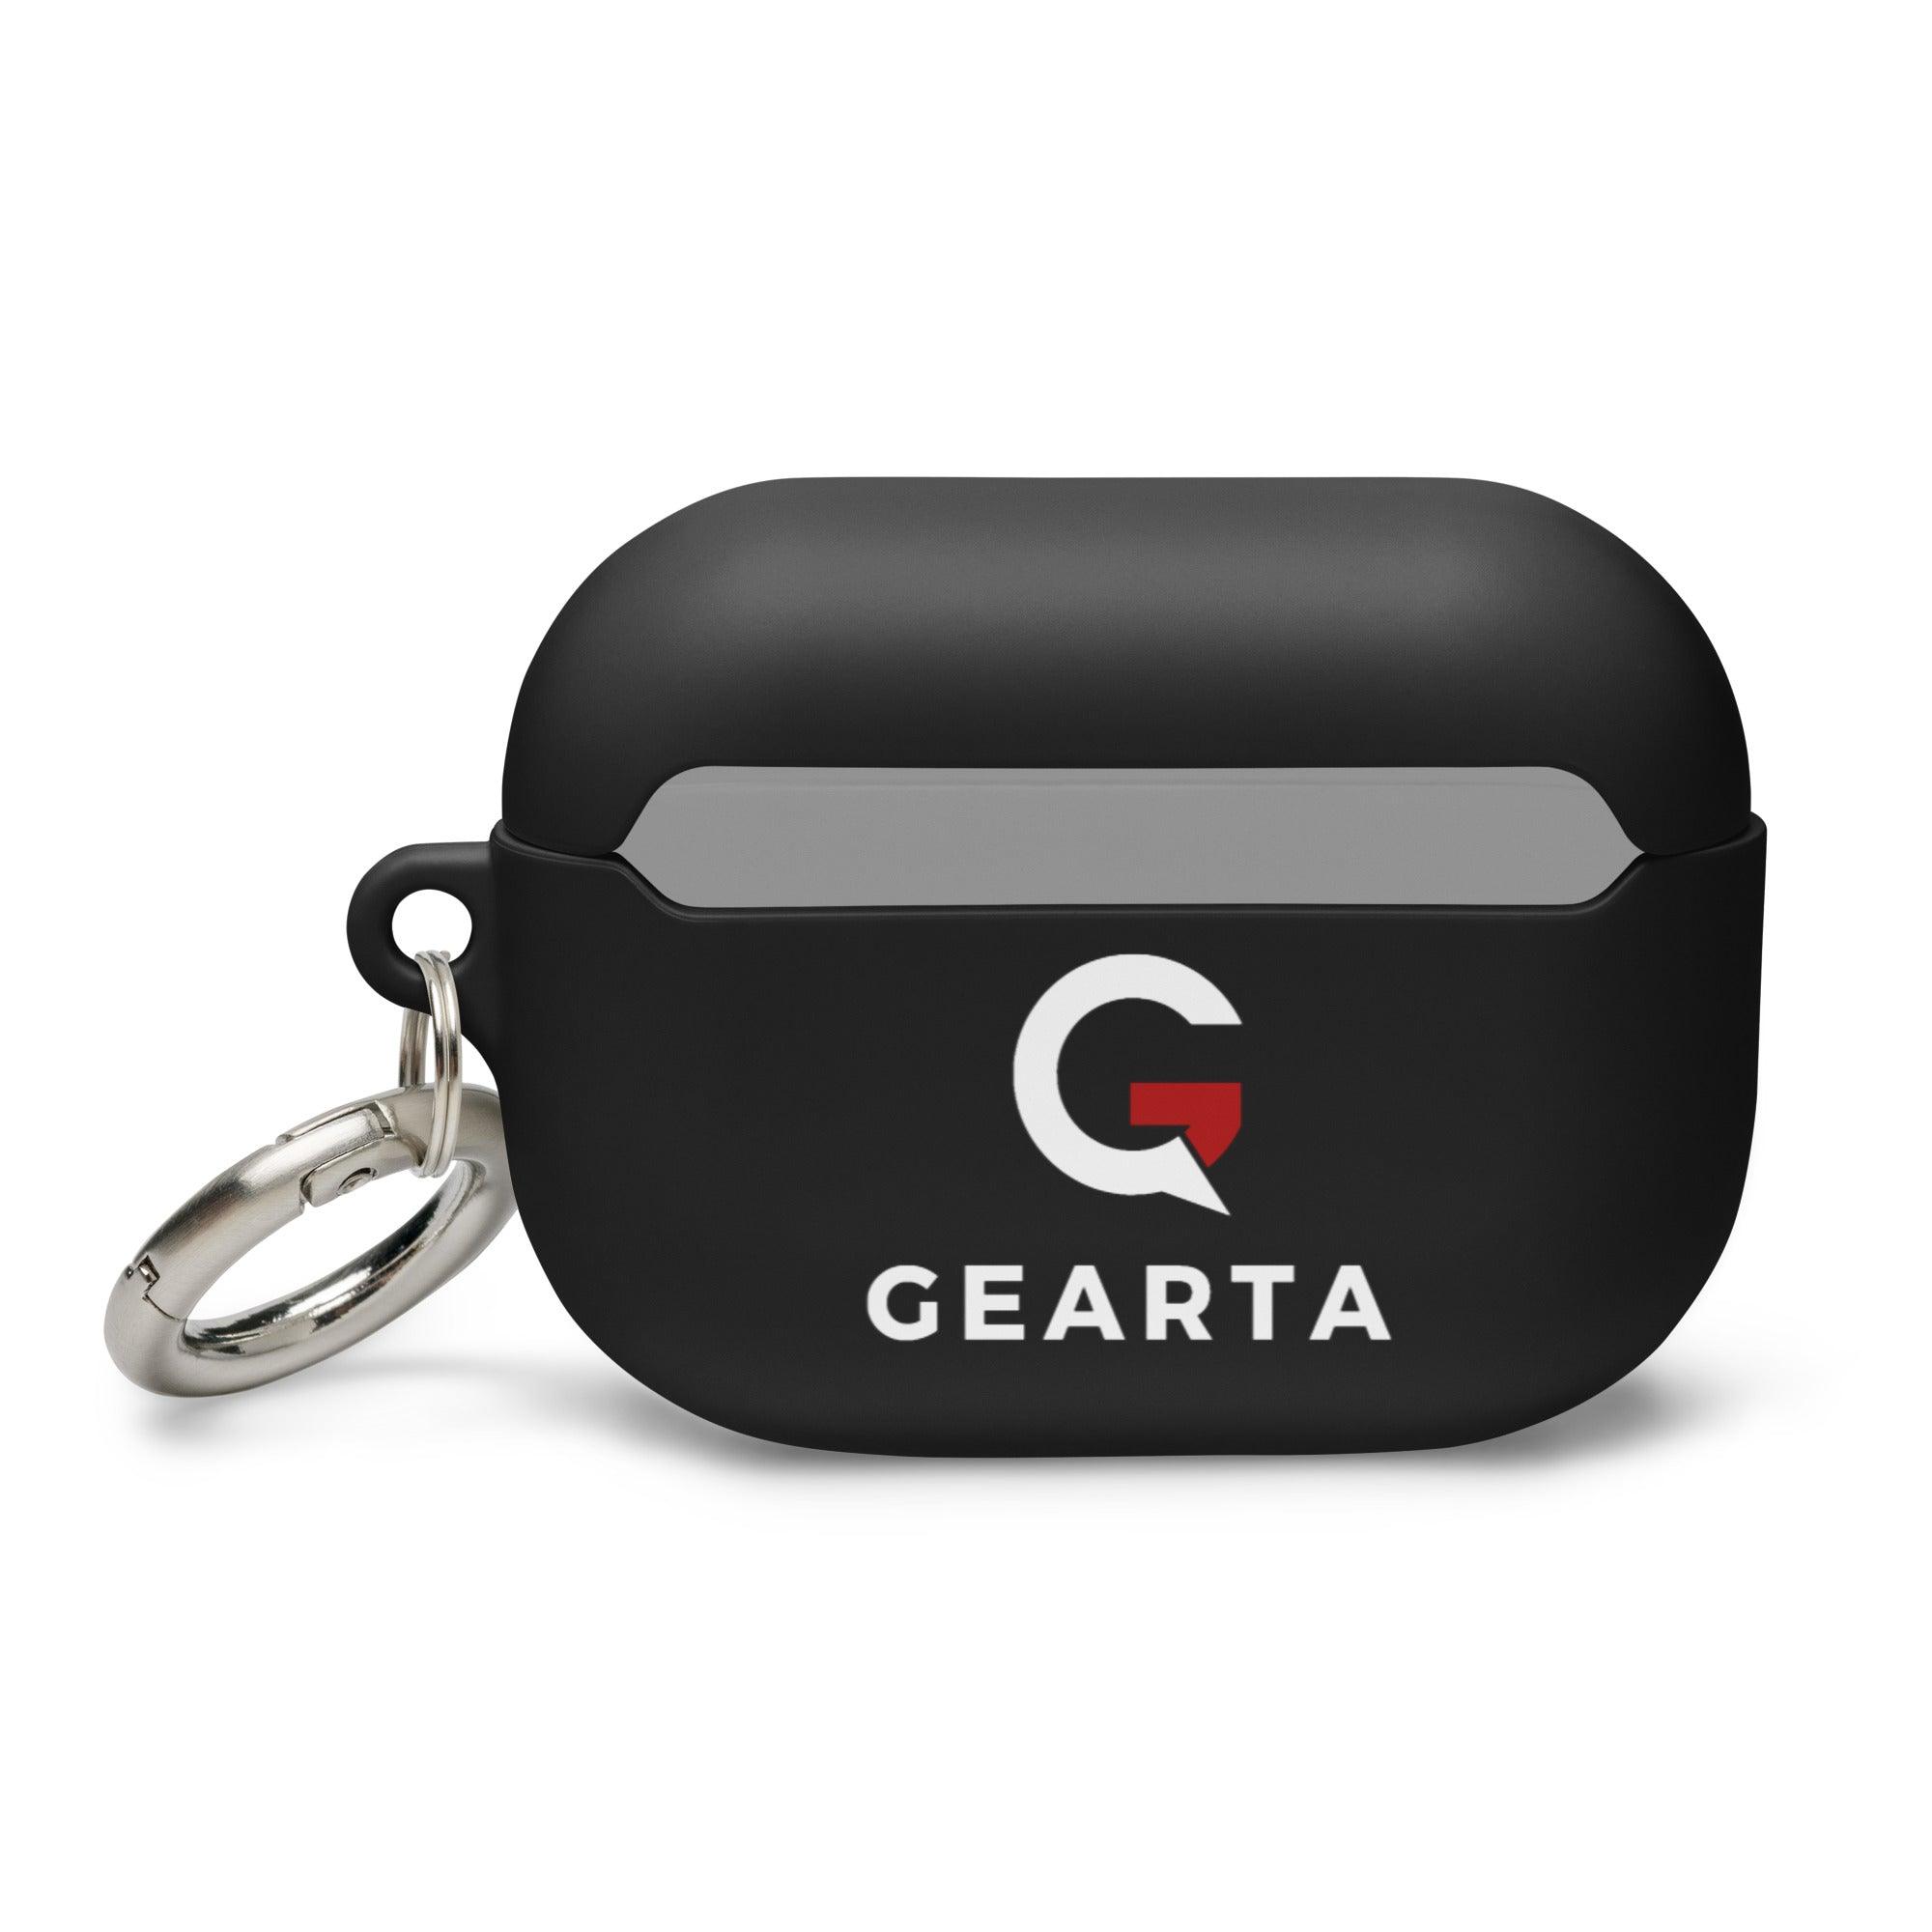 GEARTA - Minimalist Black Rubber AirPods Case